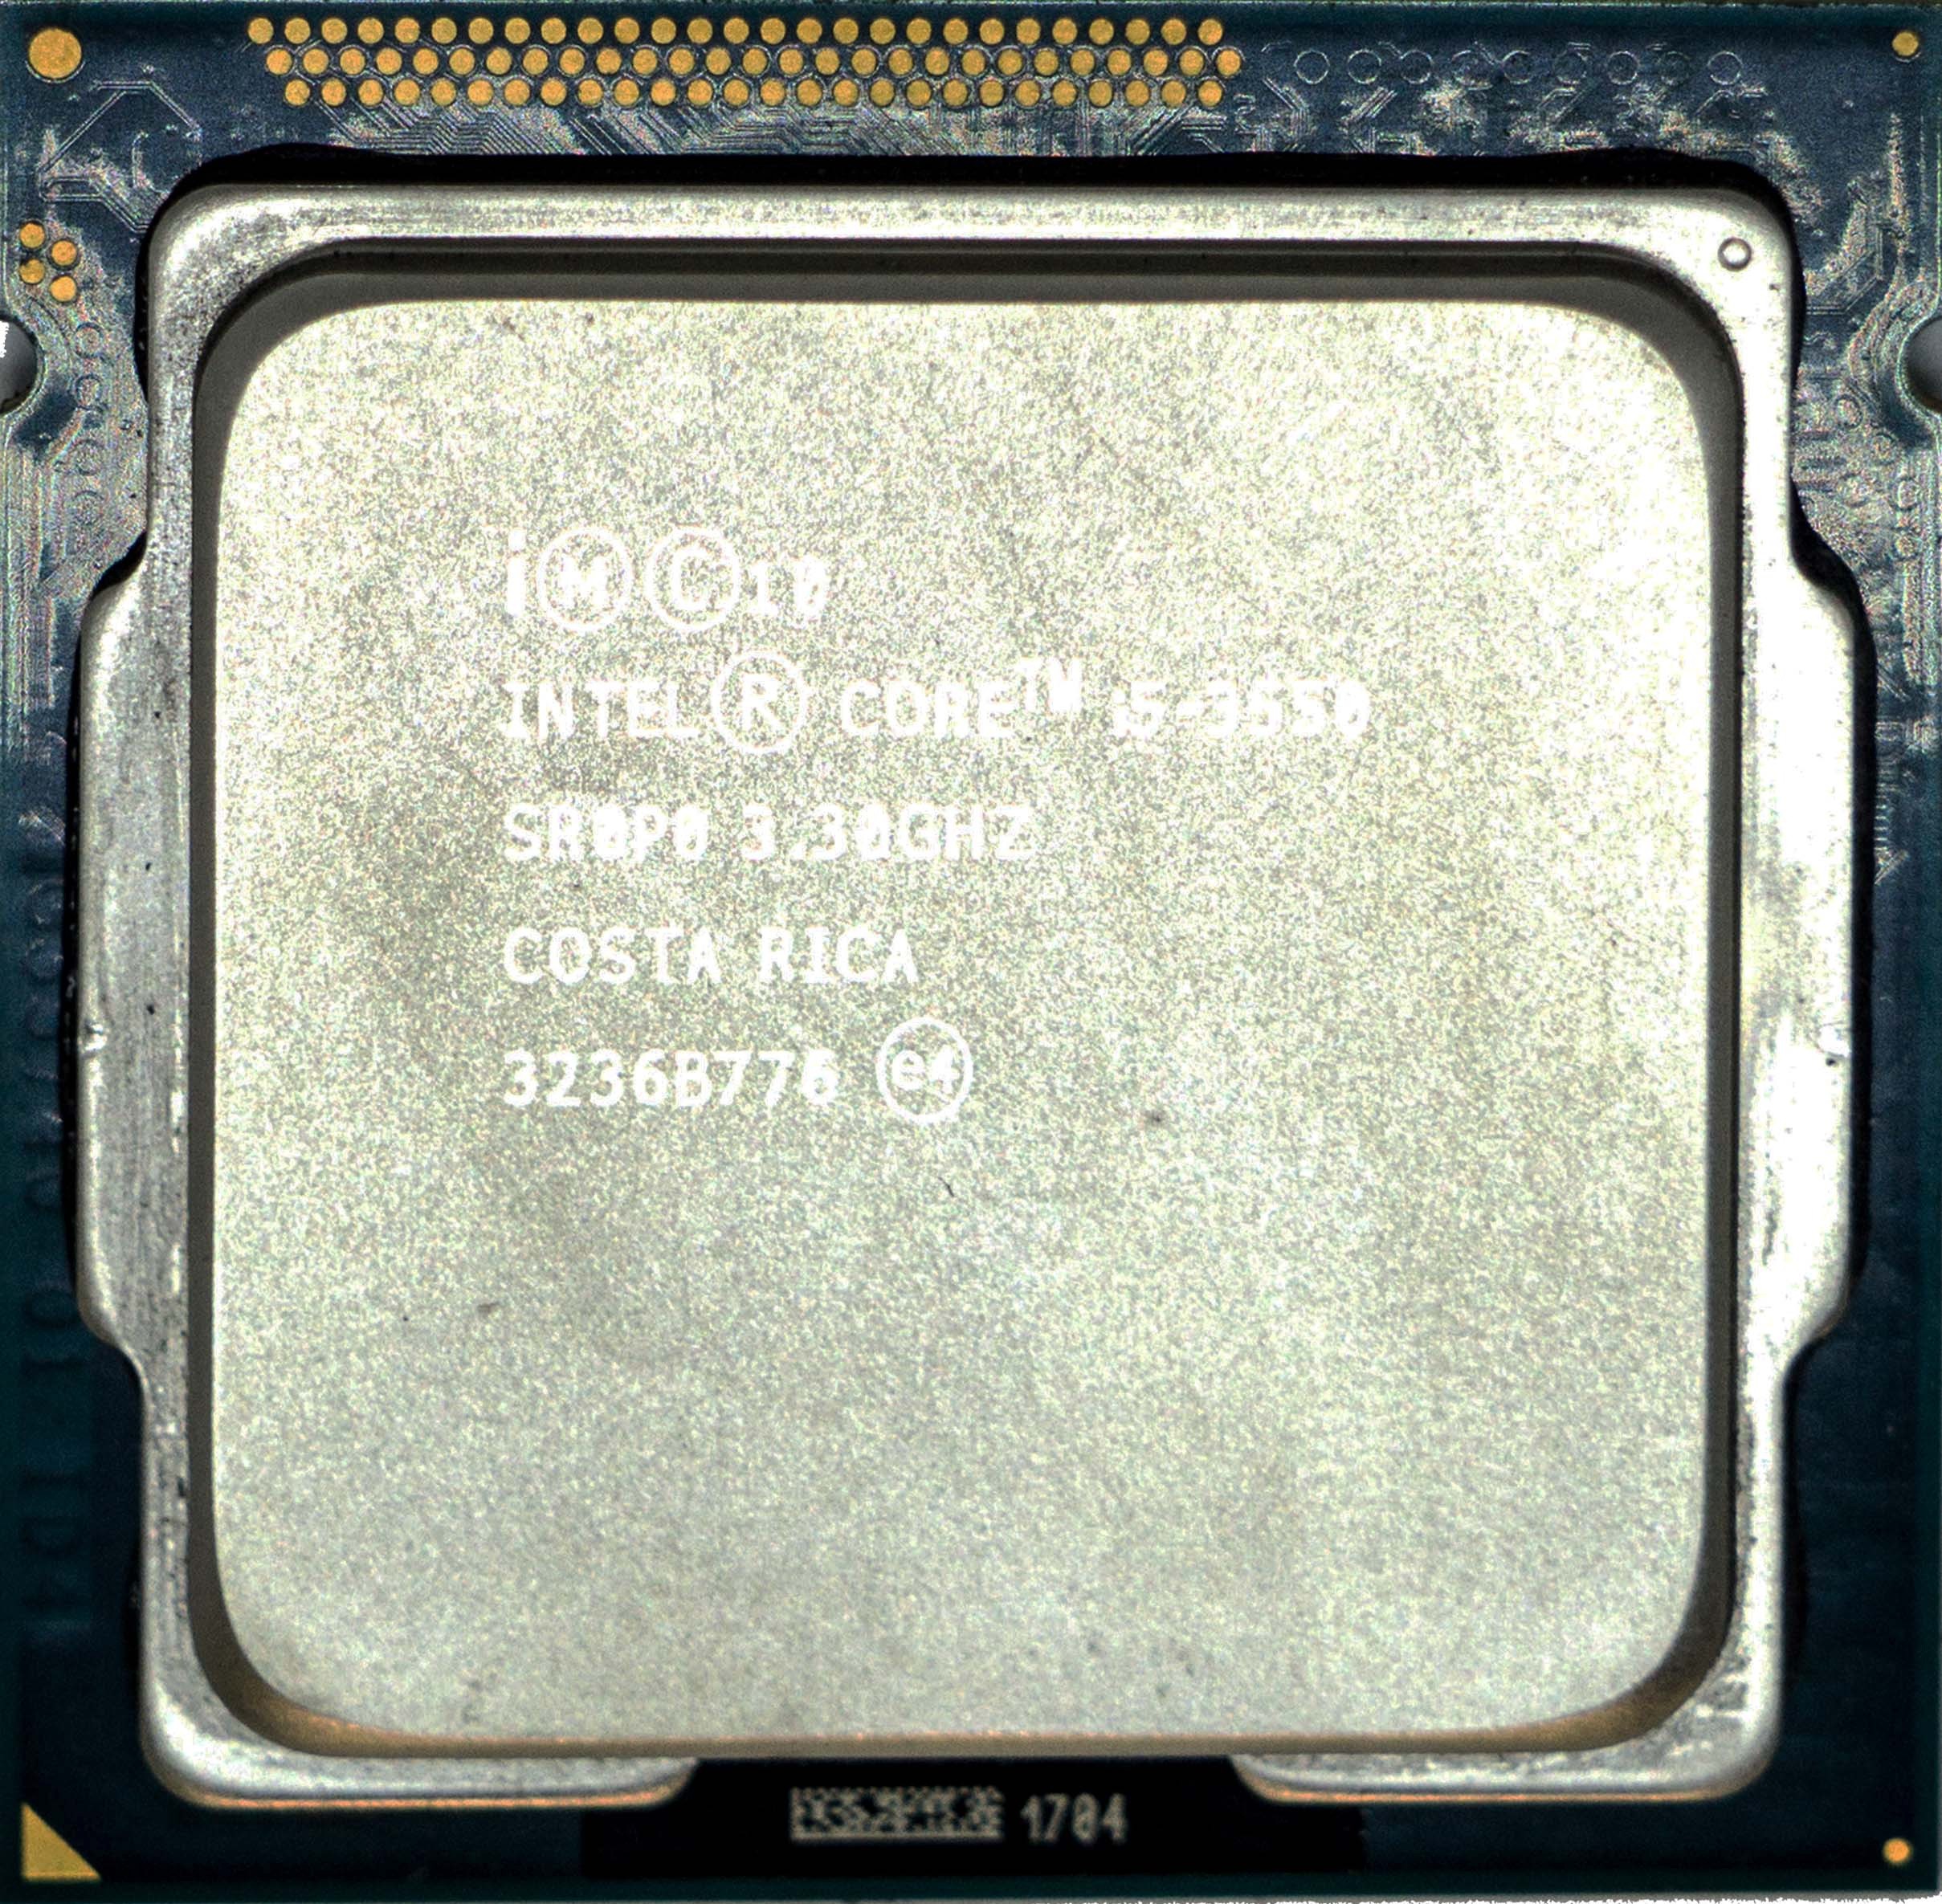 Intel Core i5-3550 (SR0P0) 3.30Ghz Quad (4) Core LGA1155 77W CPU